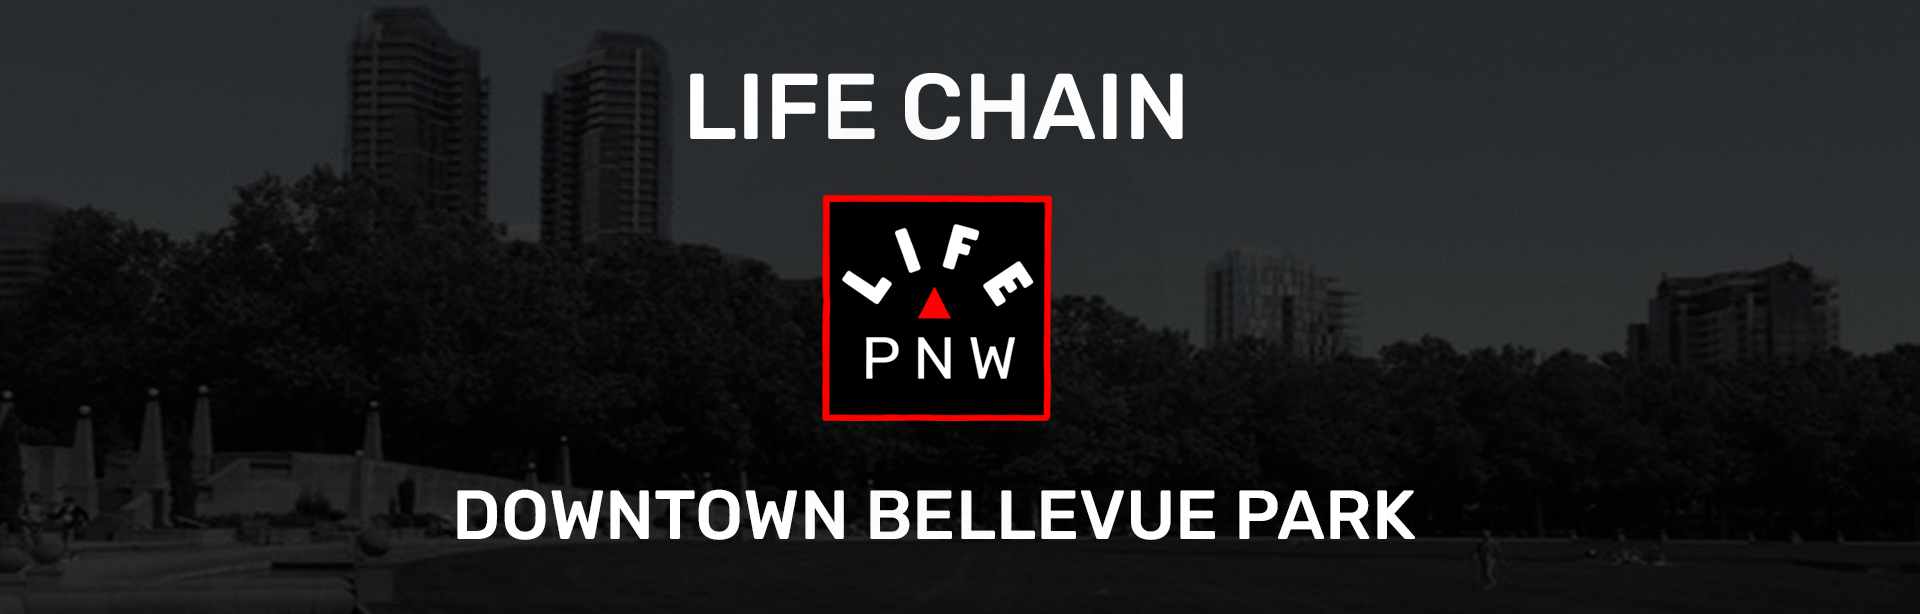 Life PNW Life Chain